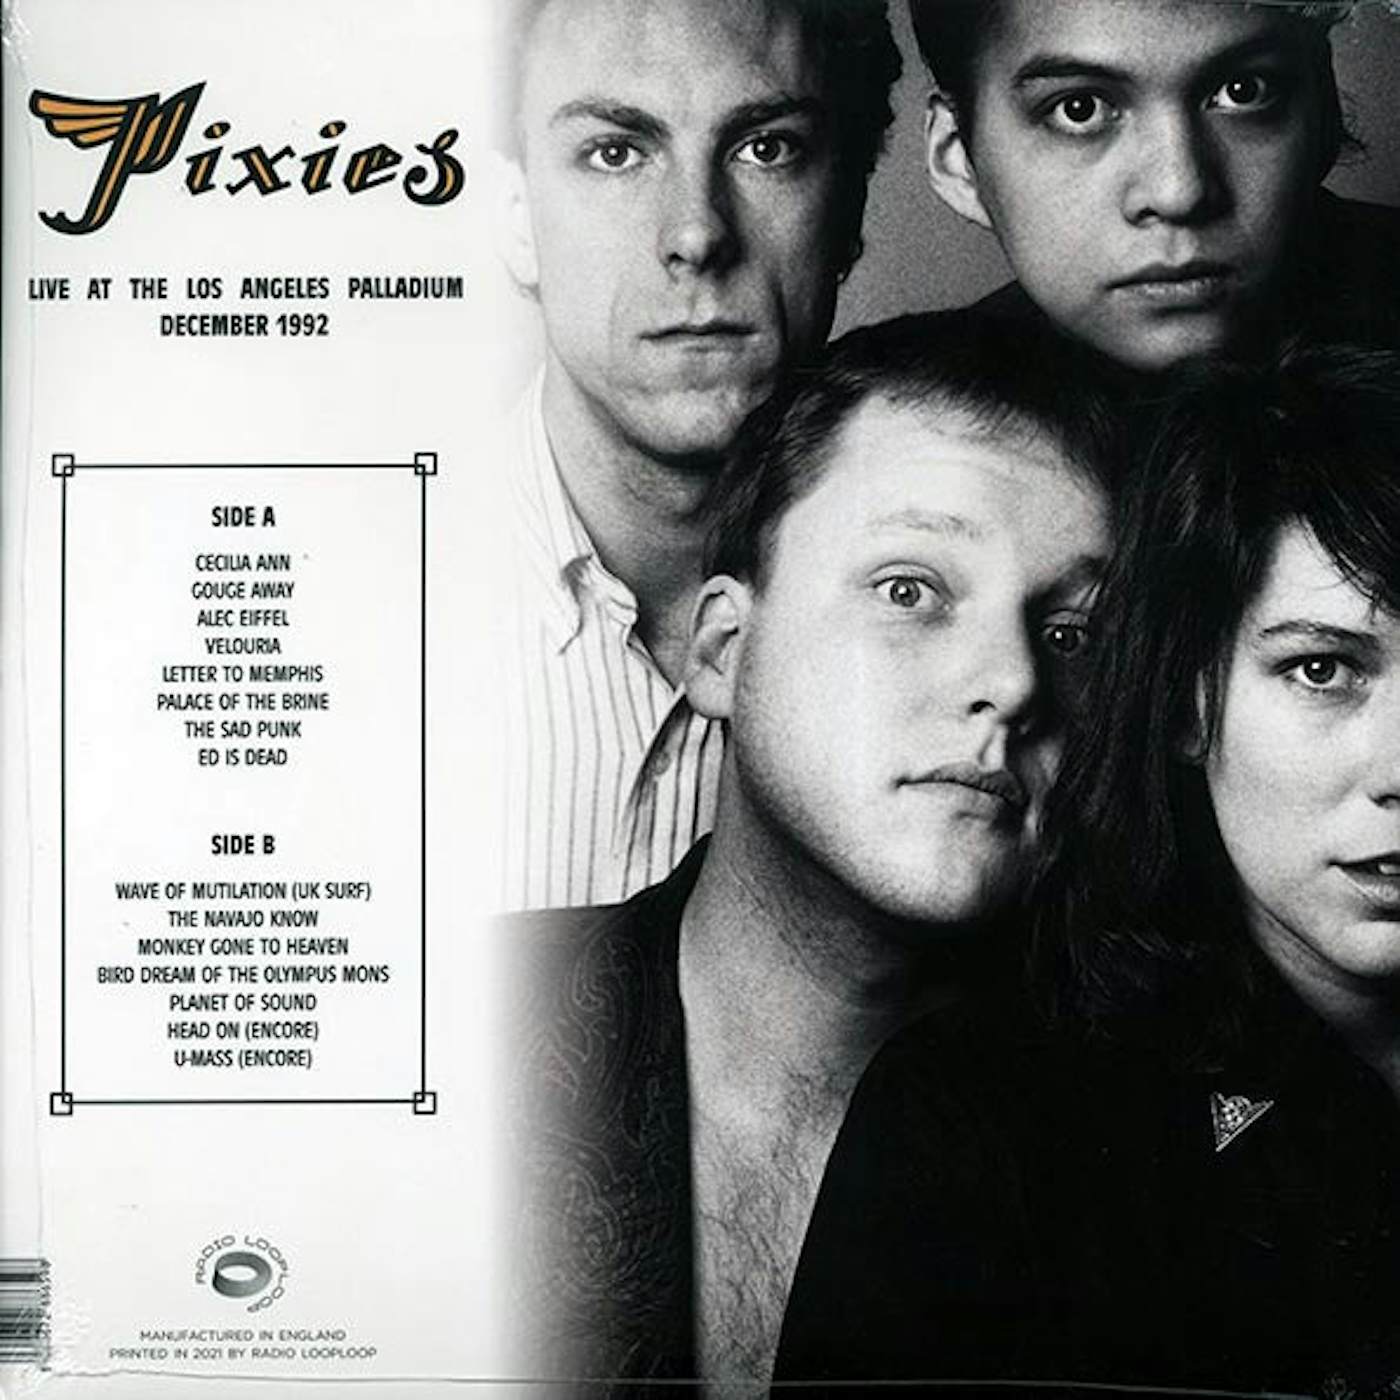 The Pixies  LP -  Live At The Los Angeles Palladium December 1992 (Vinyl)